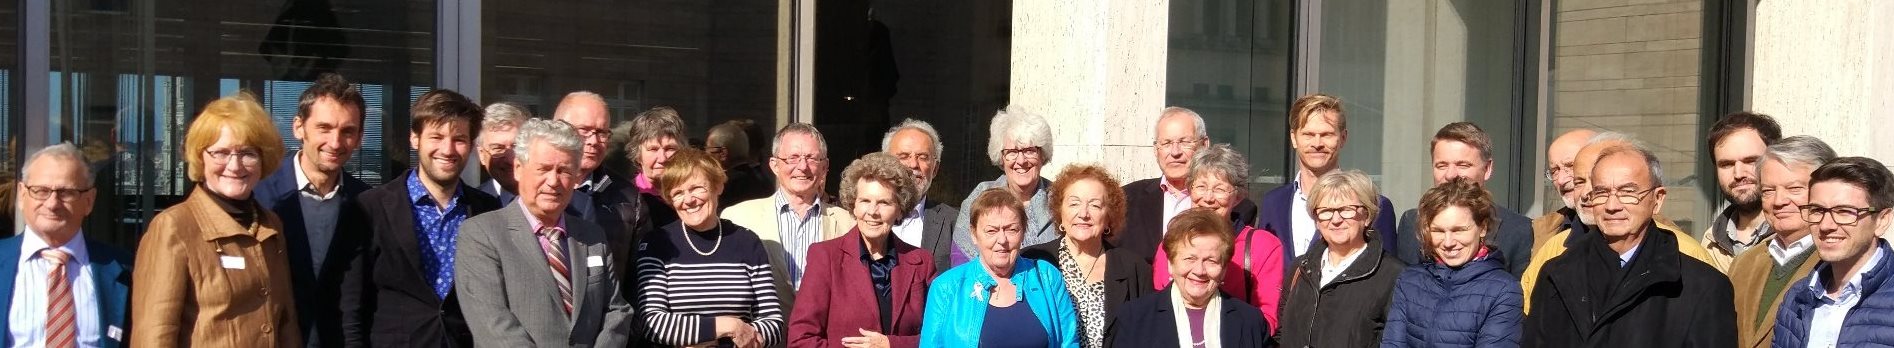 AGE Admin Council 2016